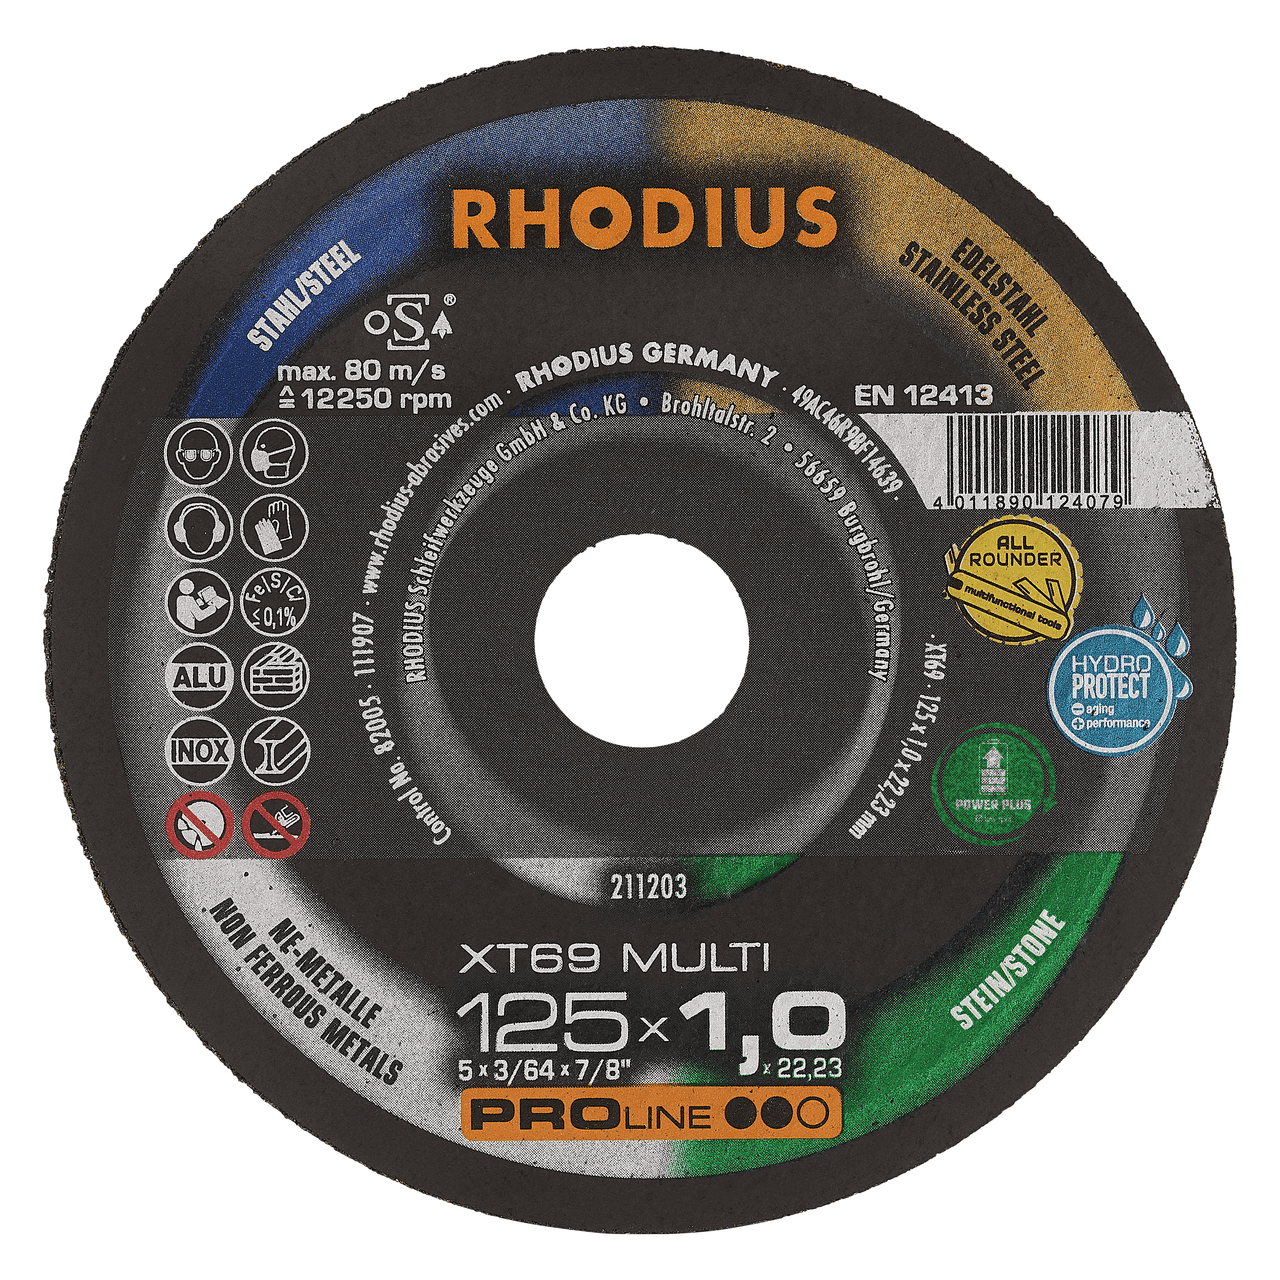 25 x RHODIUS Extradünne Trennscheibe XT69 MULTI Ø 125 mm | 211203